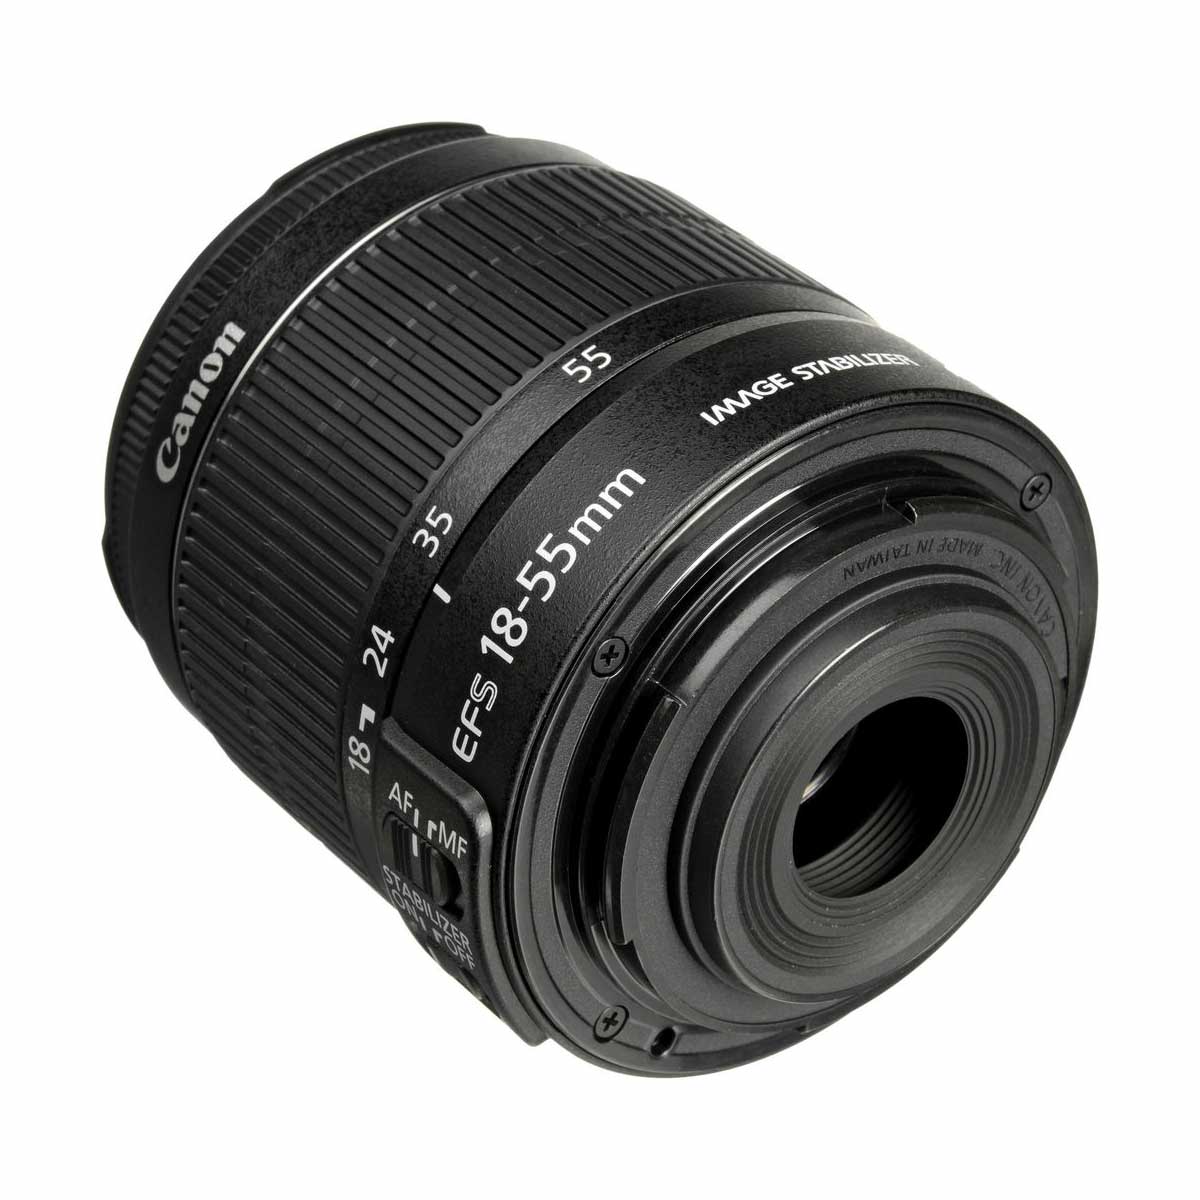 Canon EF-S 18-55mm f3.5-5.6 IS II Lens *OPEN BOX*